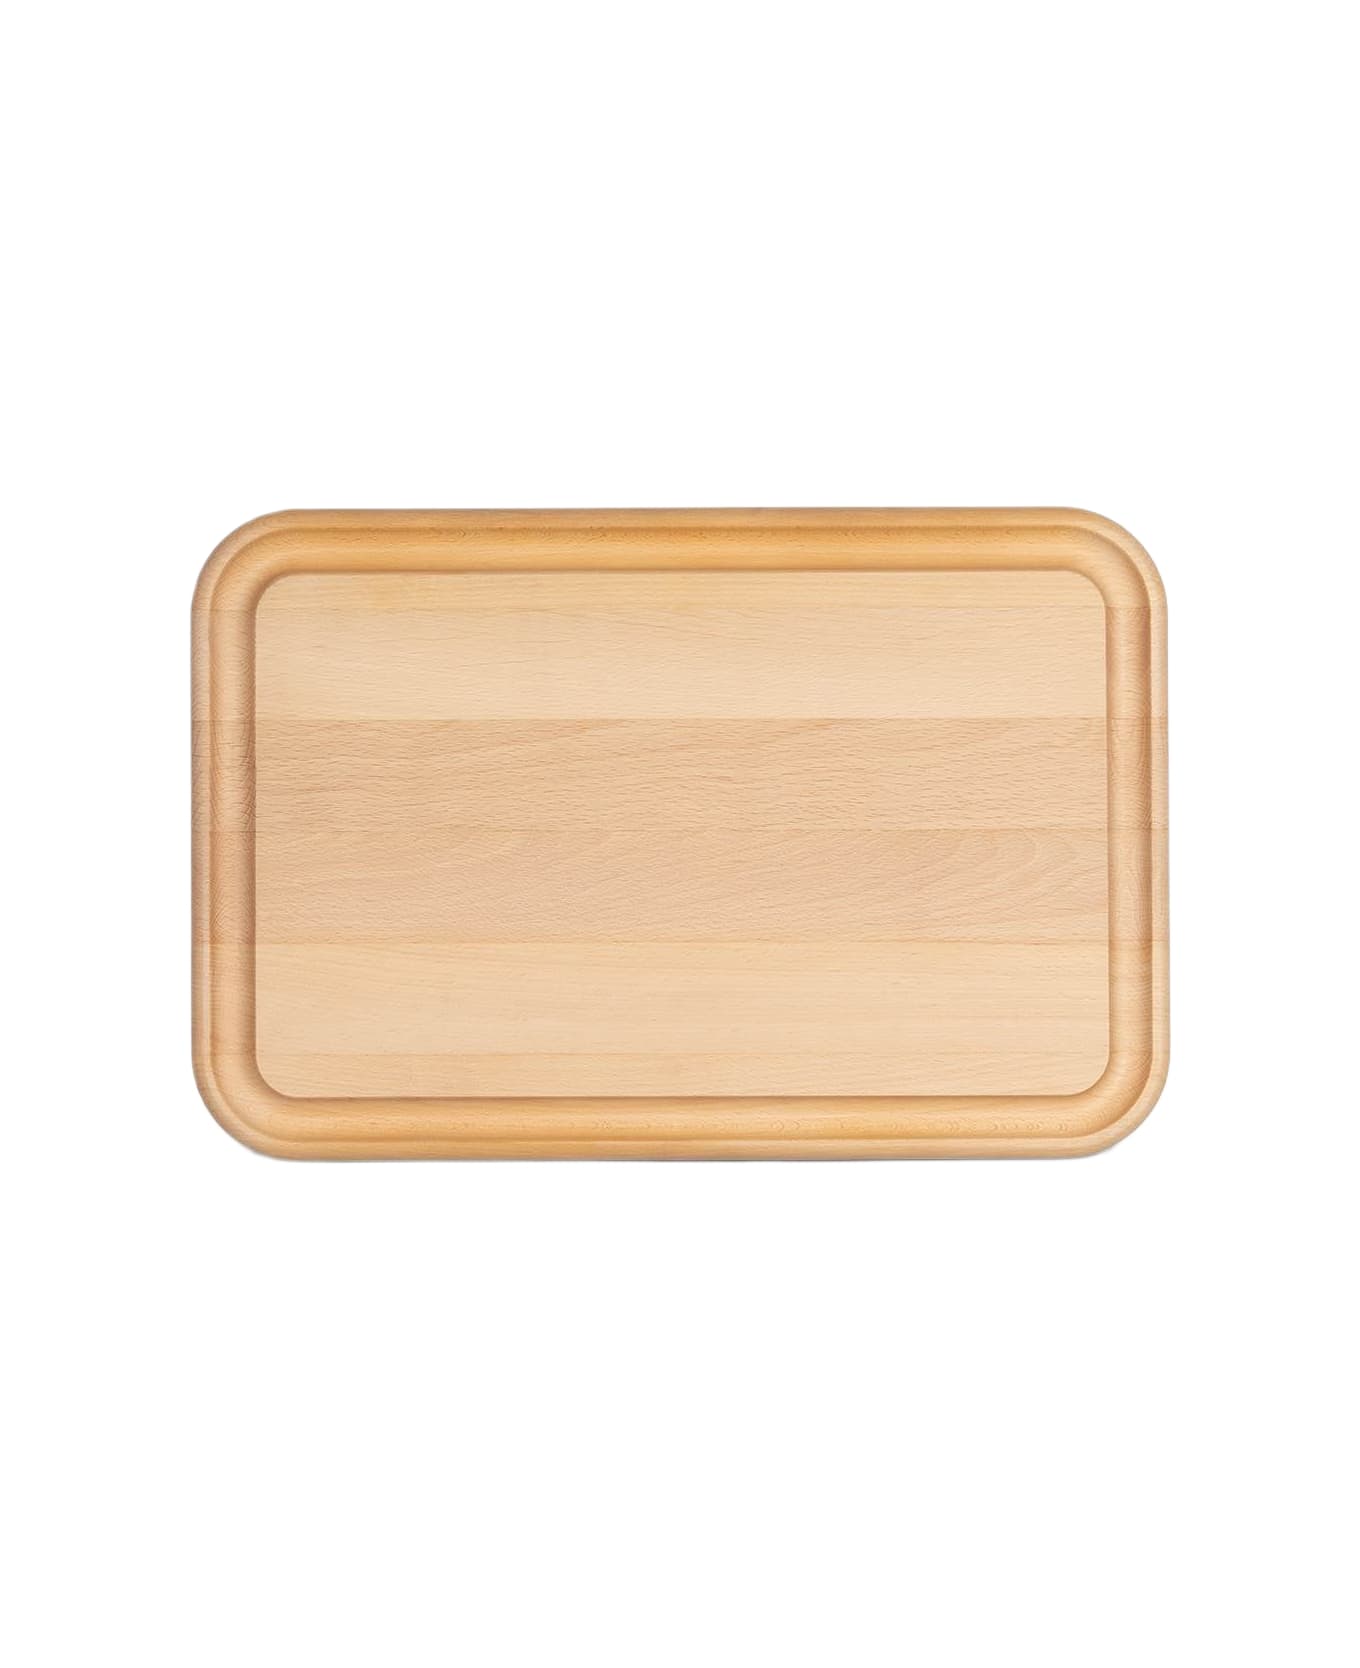 Larusmiani Roast Cutting Board  - Neutral